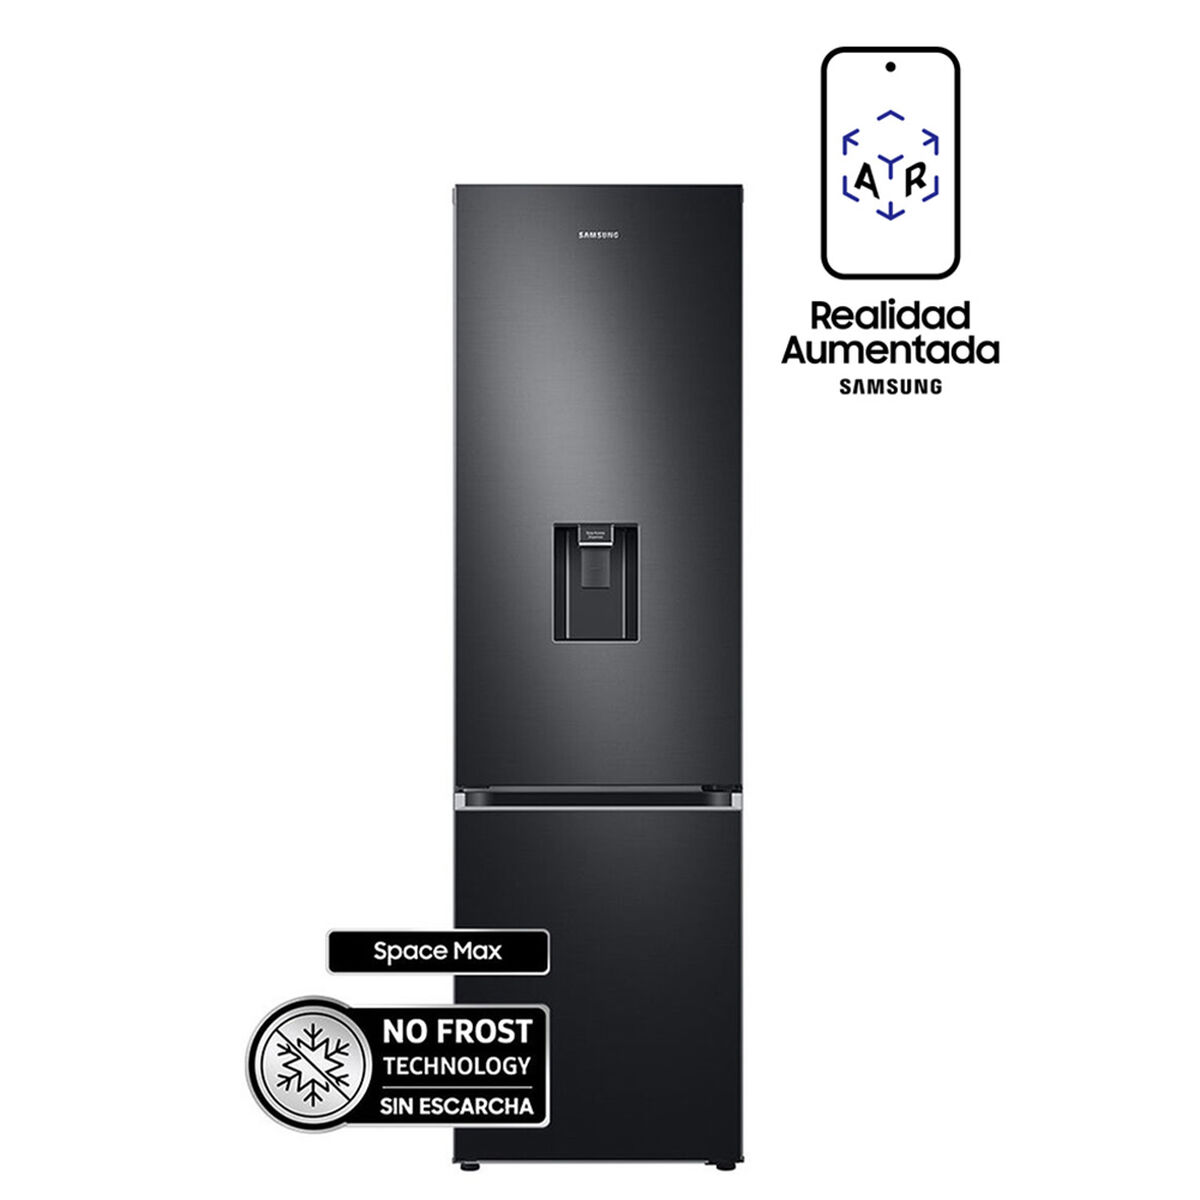 Refrigerador No Frost Samsung RB38T636DB1/ZS 376 lts.